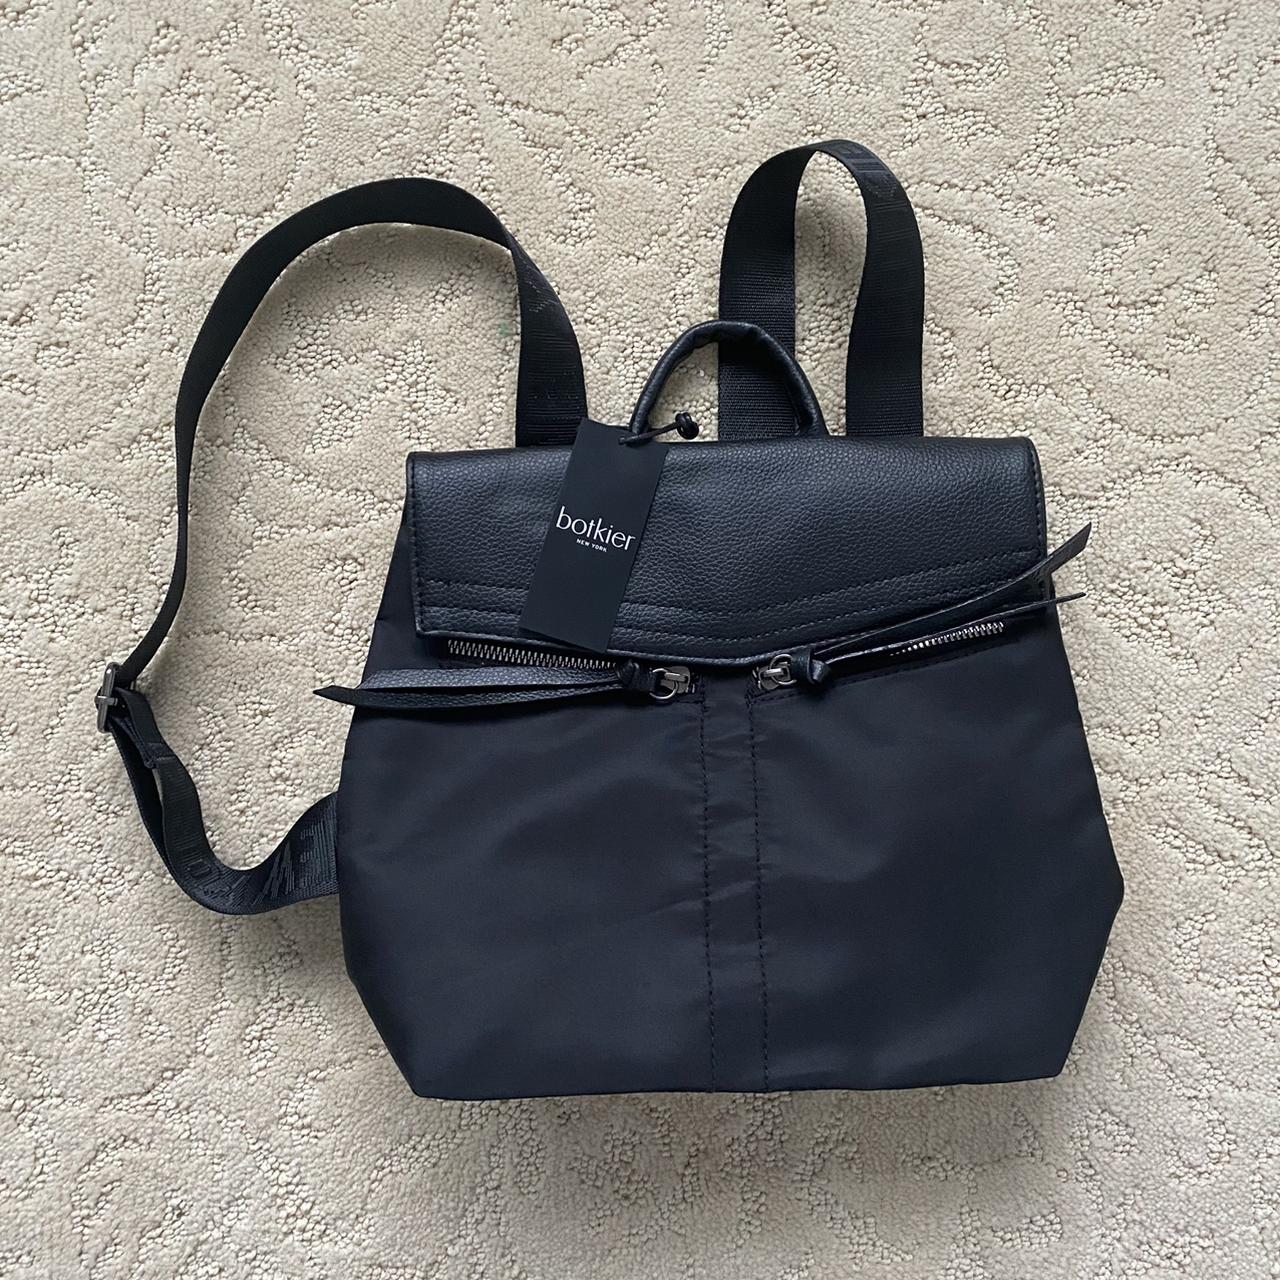 Botkier Women's Black and Grey Bag